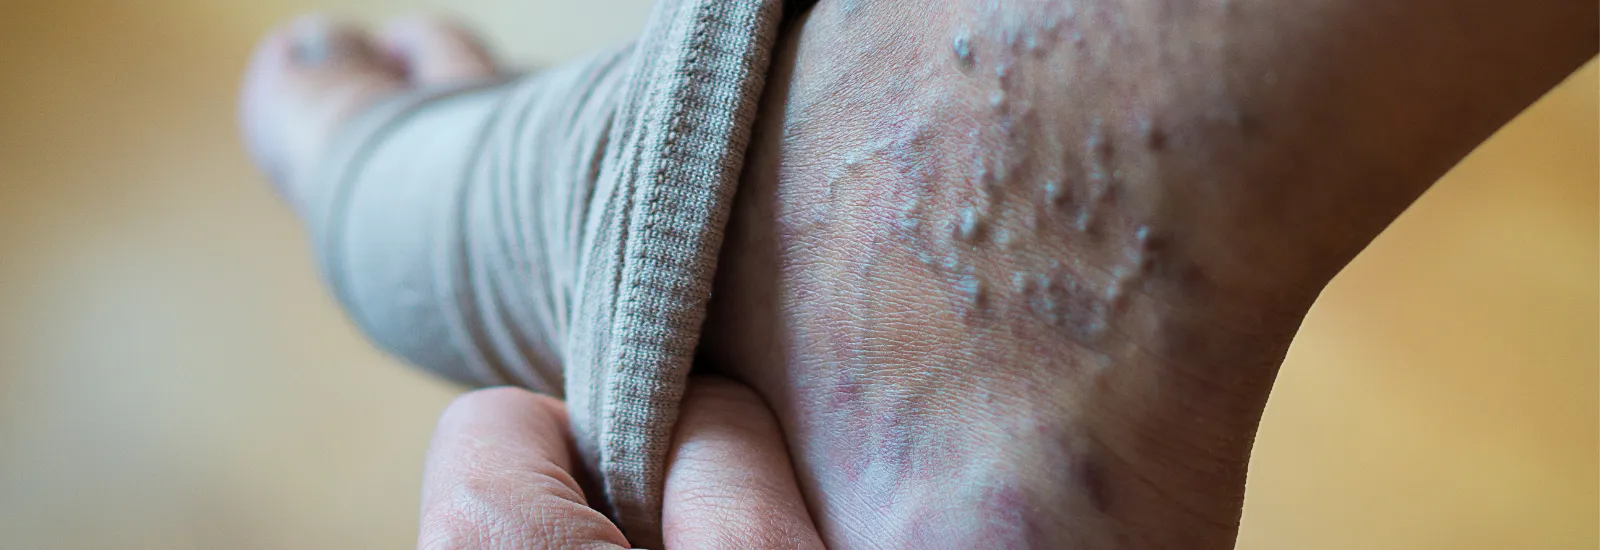 Varicose veins affecting the leg of an elderly man - Stock Image